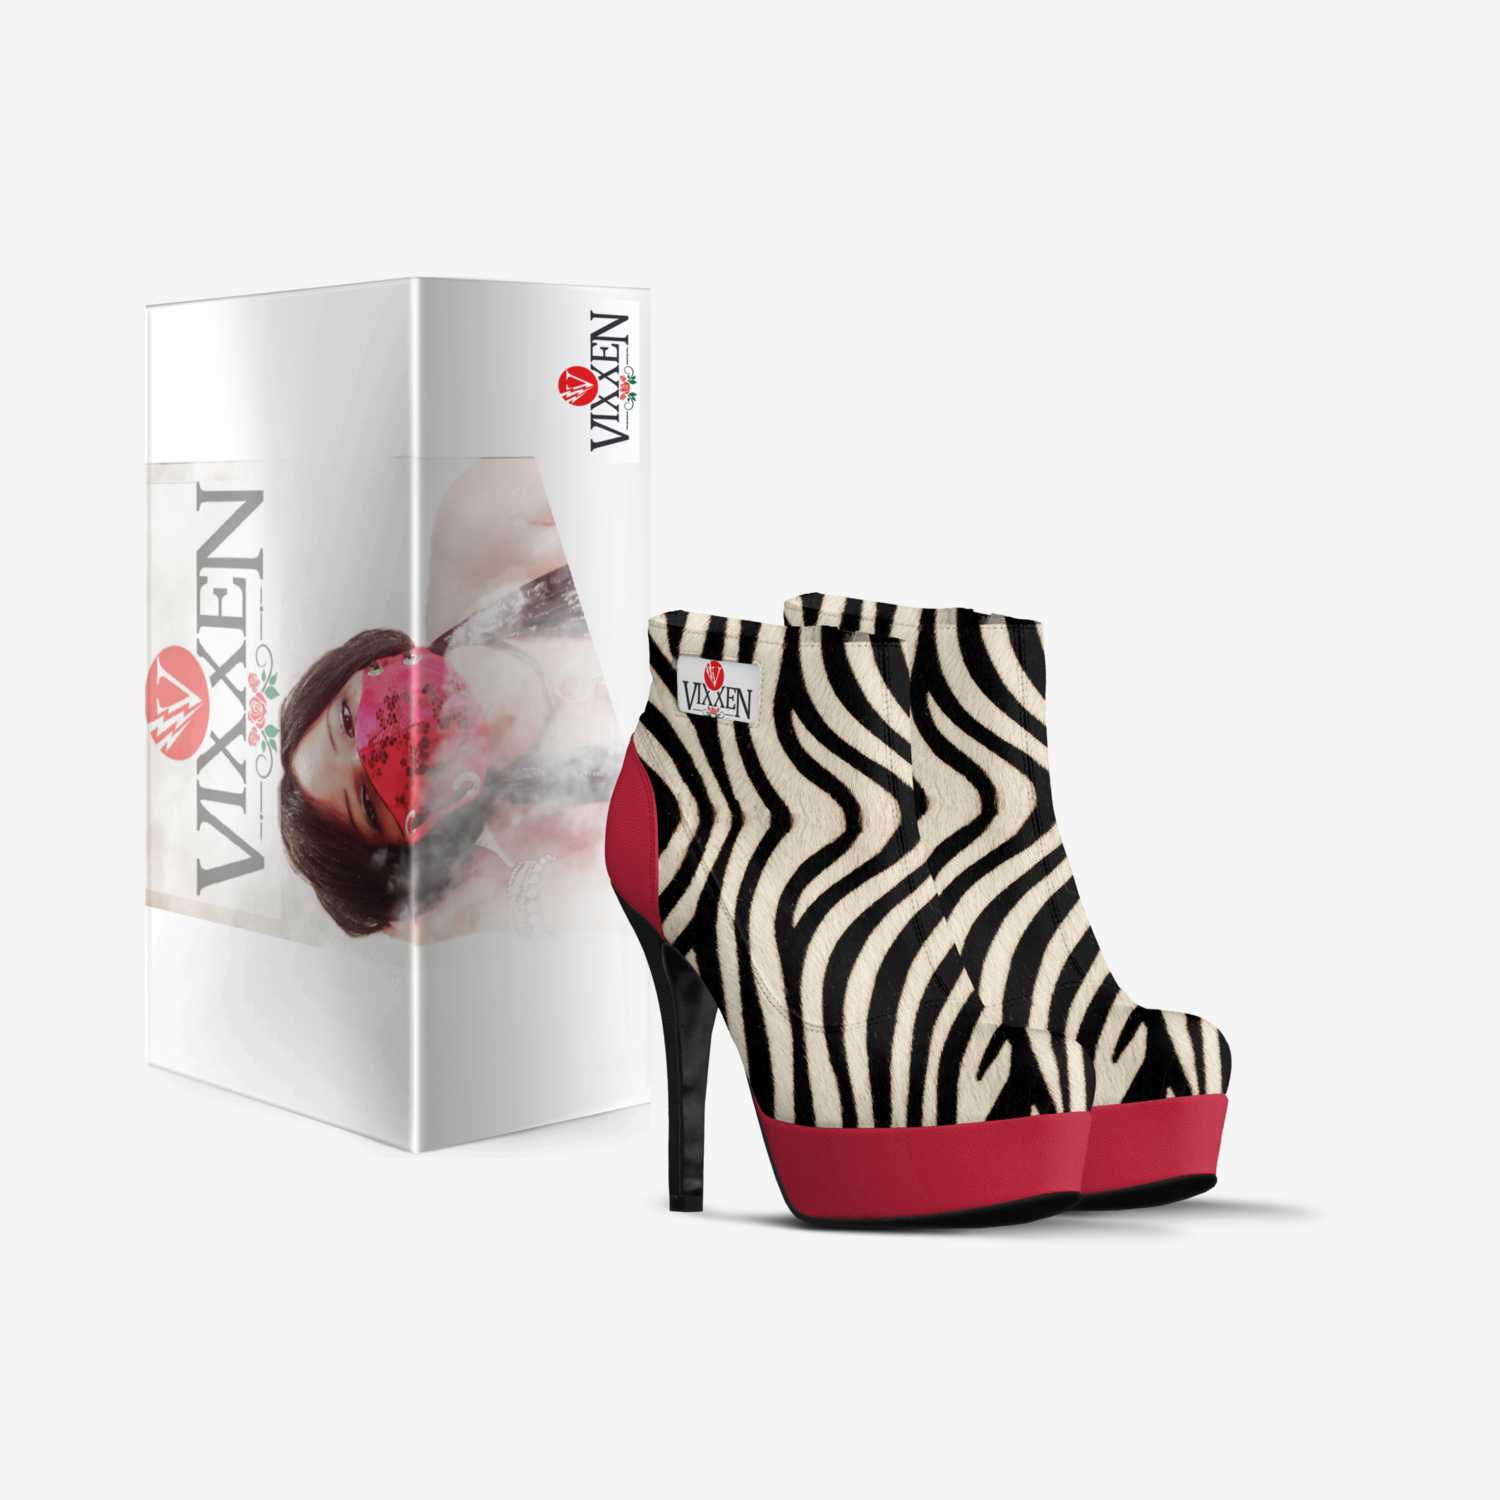 A Vixxen custom made in Italy shoes by April Via | Box view